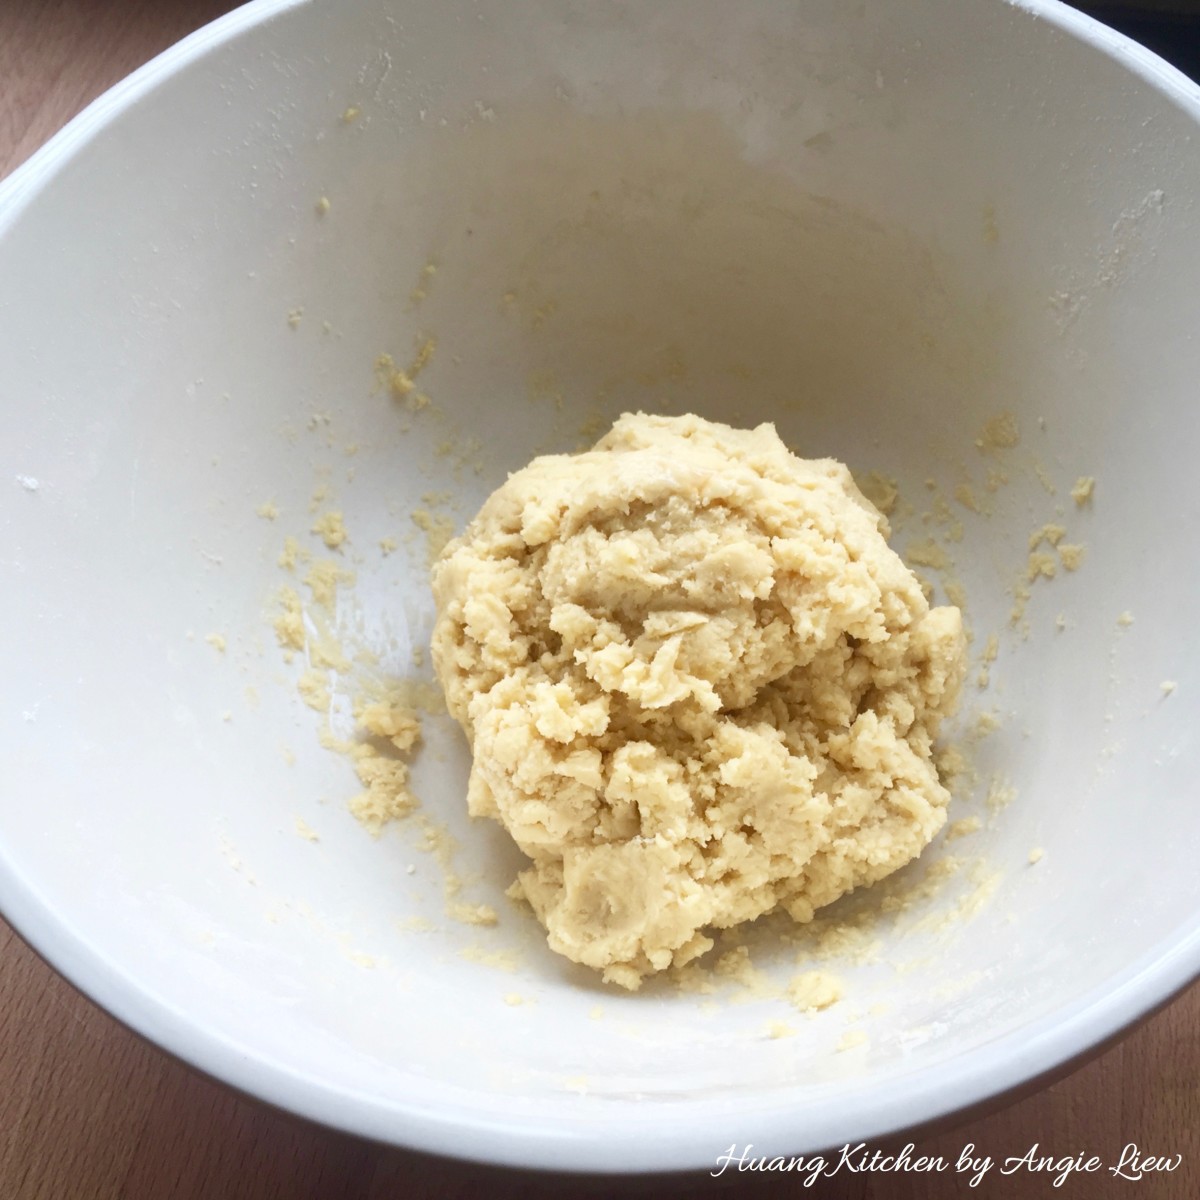 Rose Pineapple Tarts Recipe - gather dough